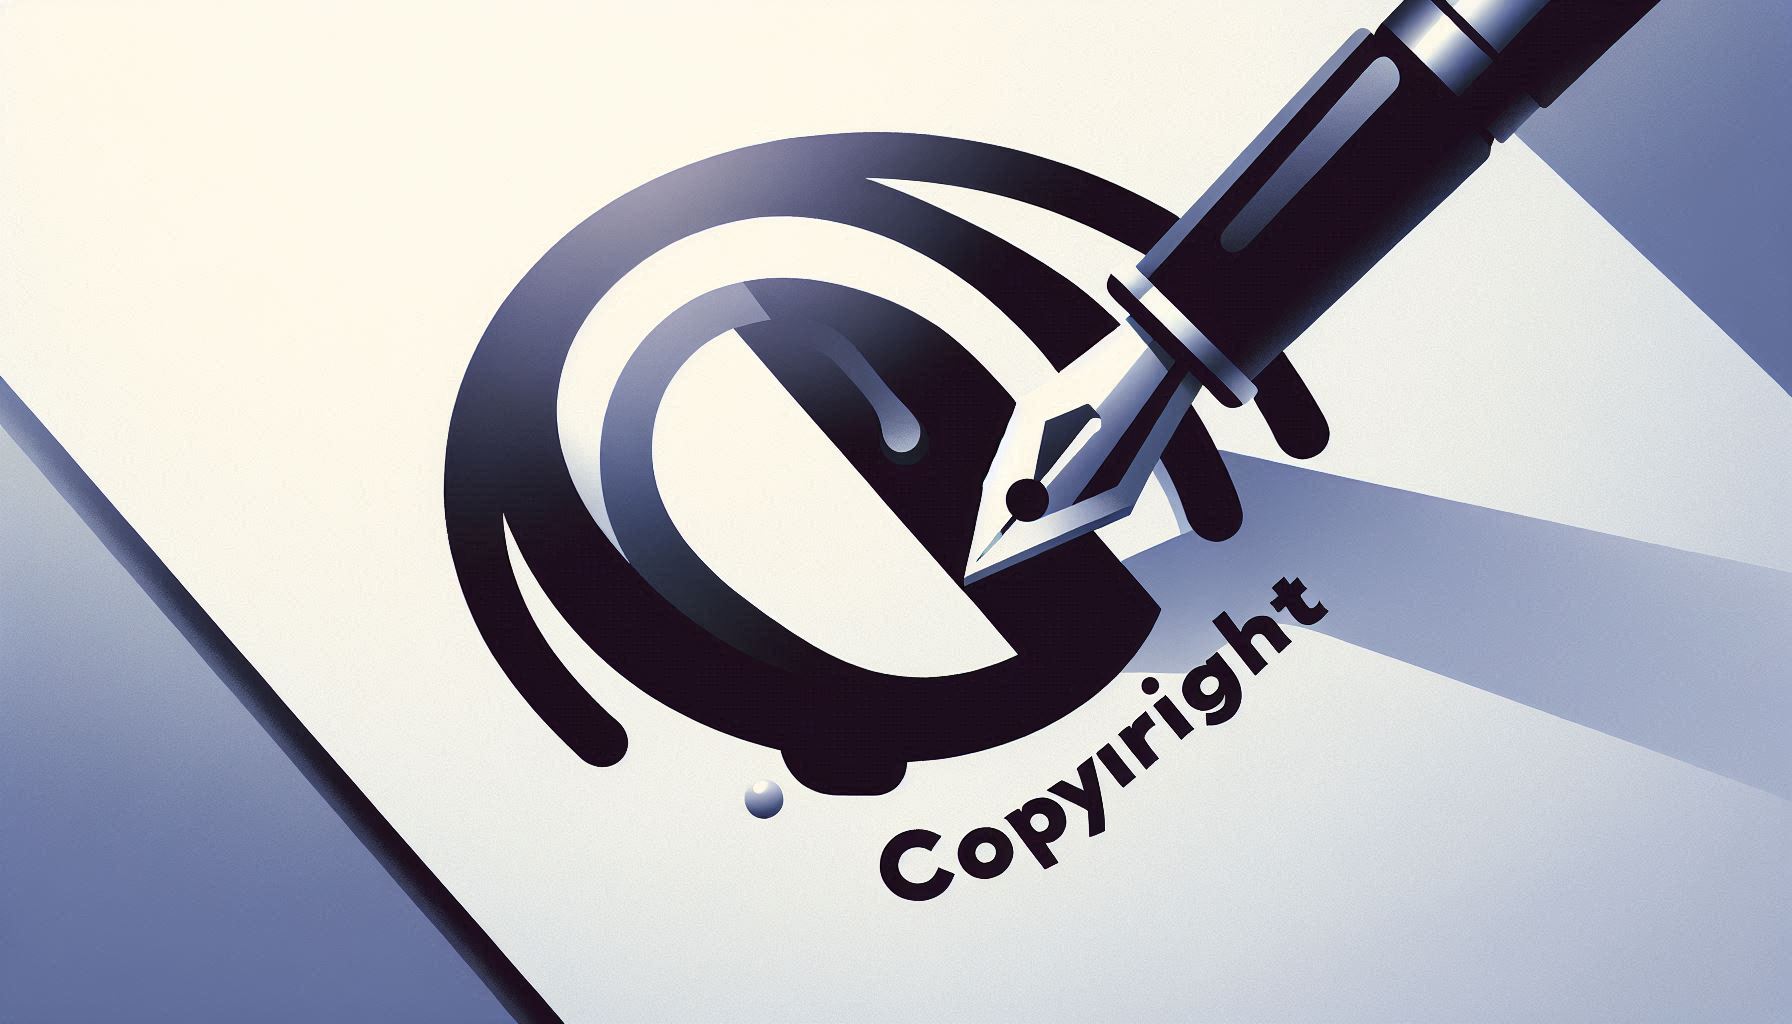 （Copyright）とは？著作権表示の正しい書き方や意味を解説